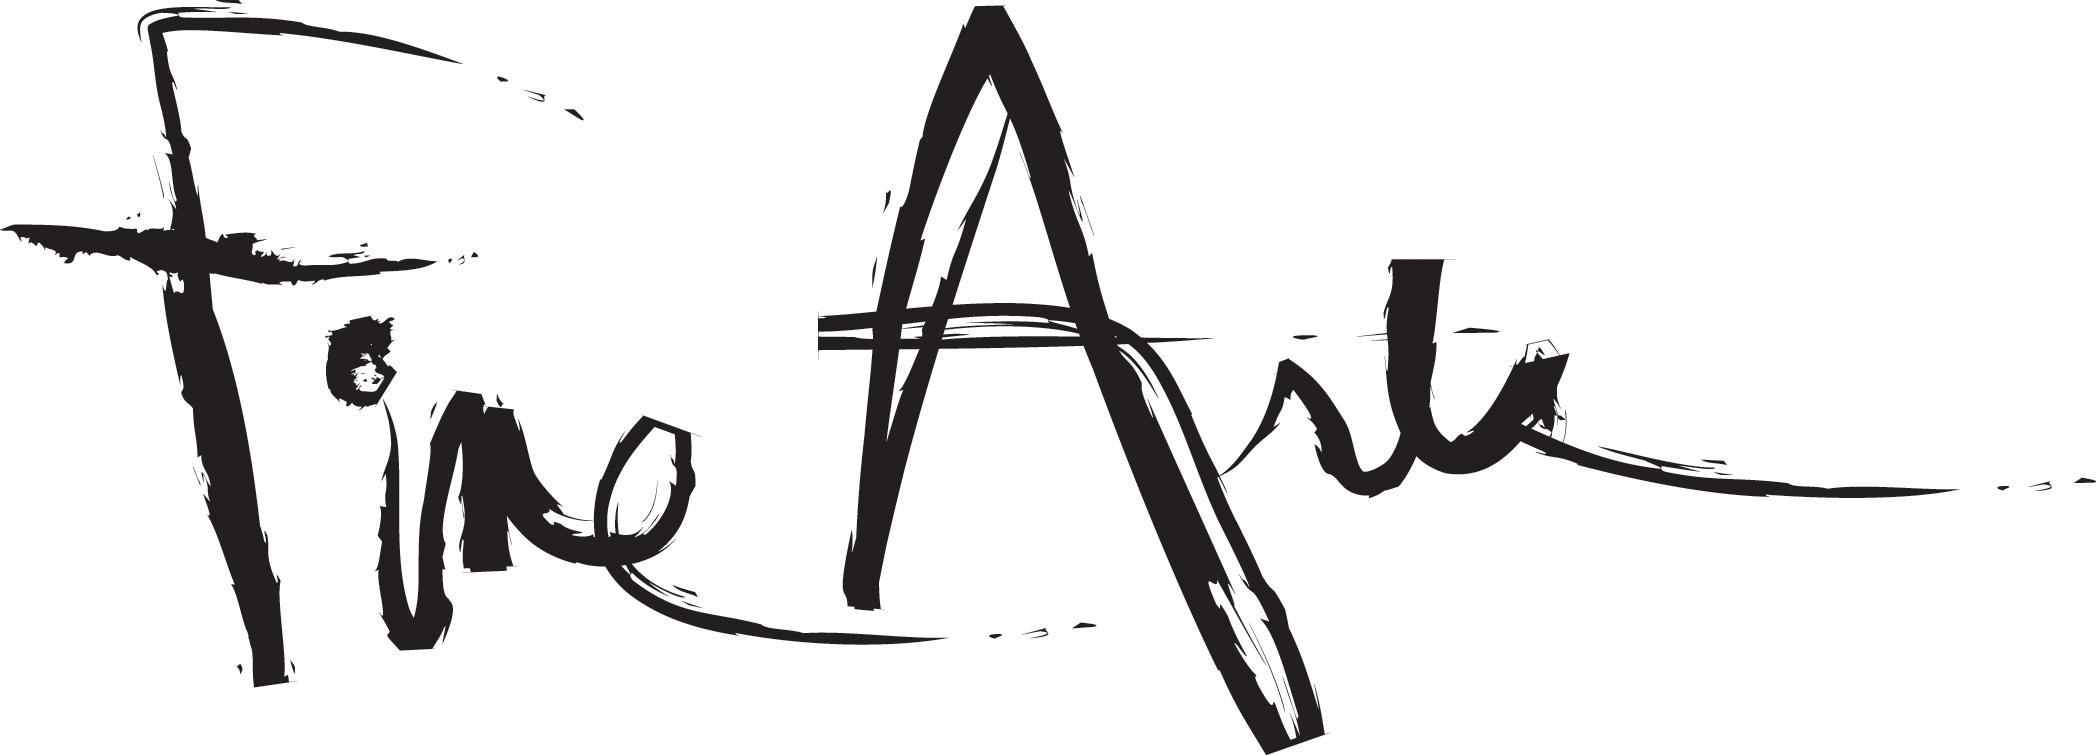 Fine Arts Logo